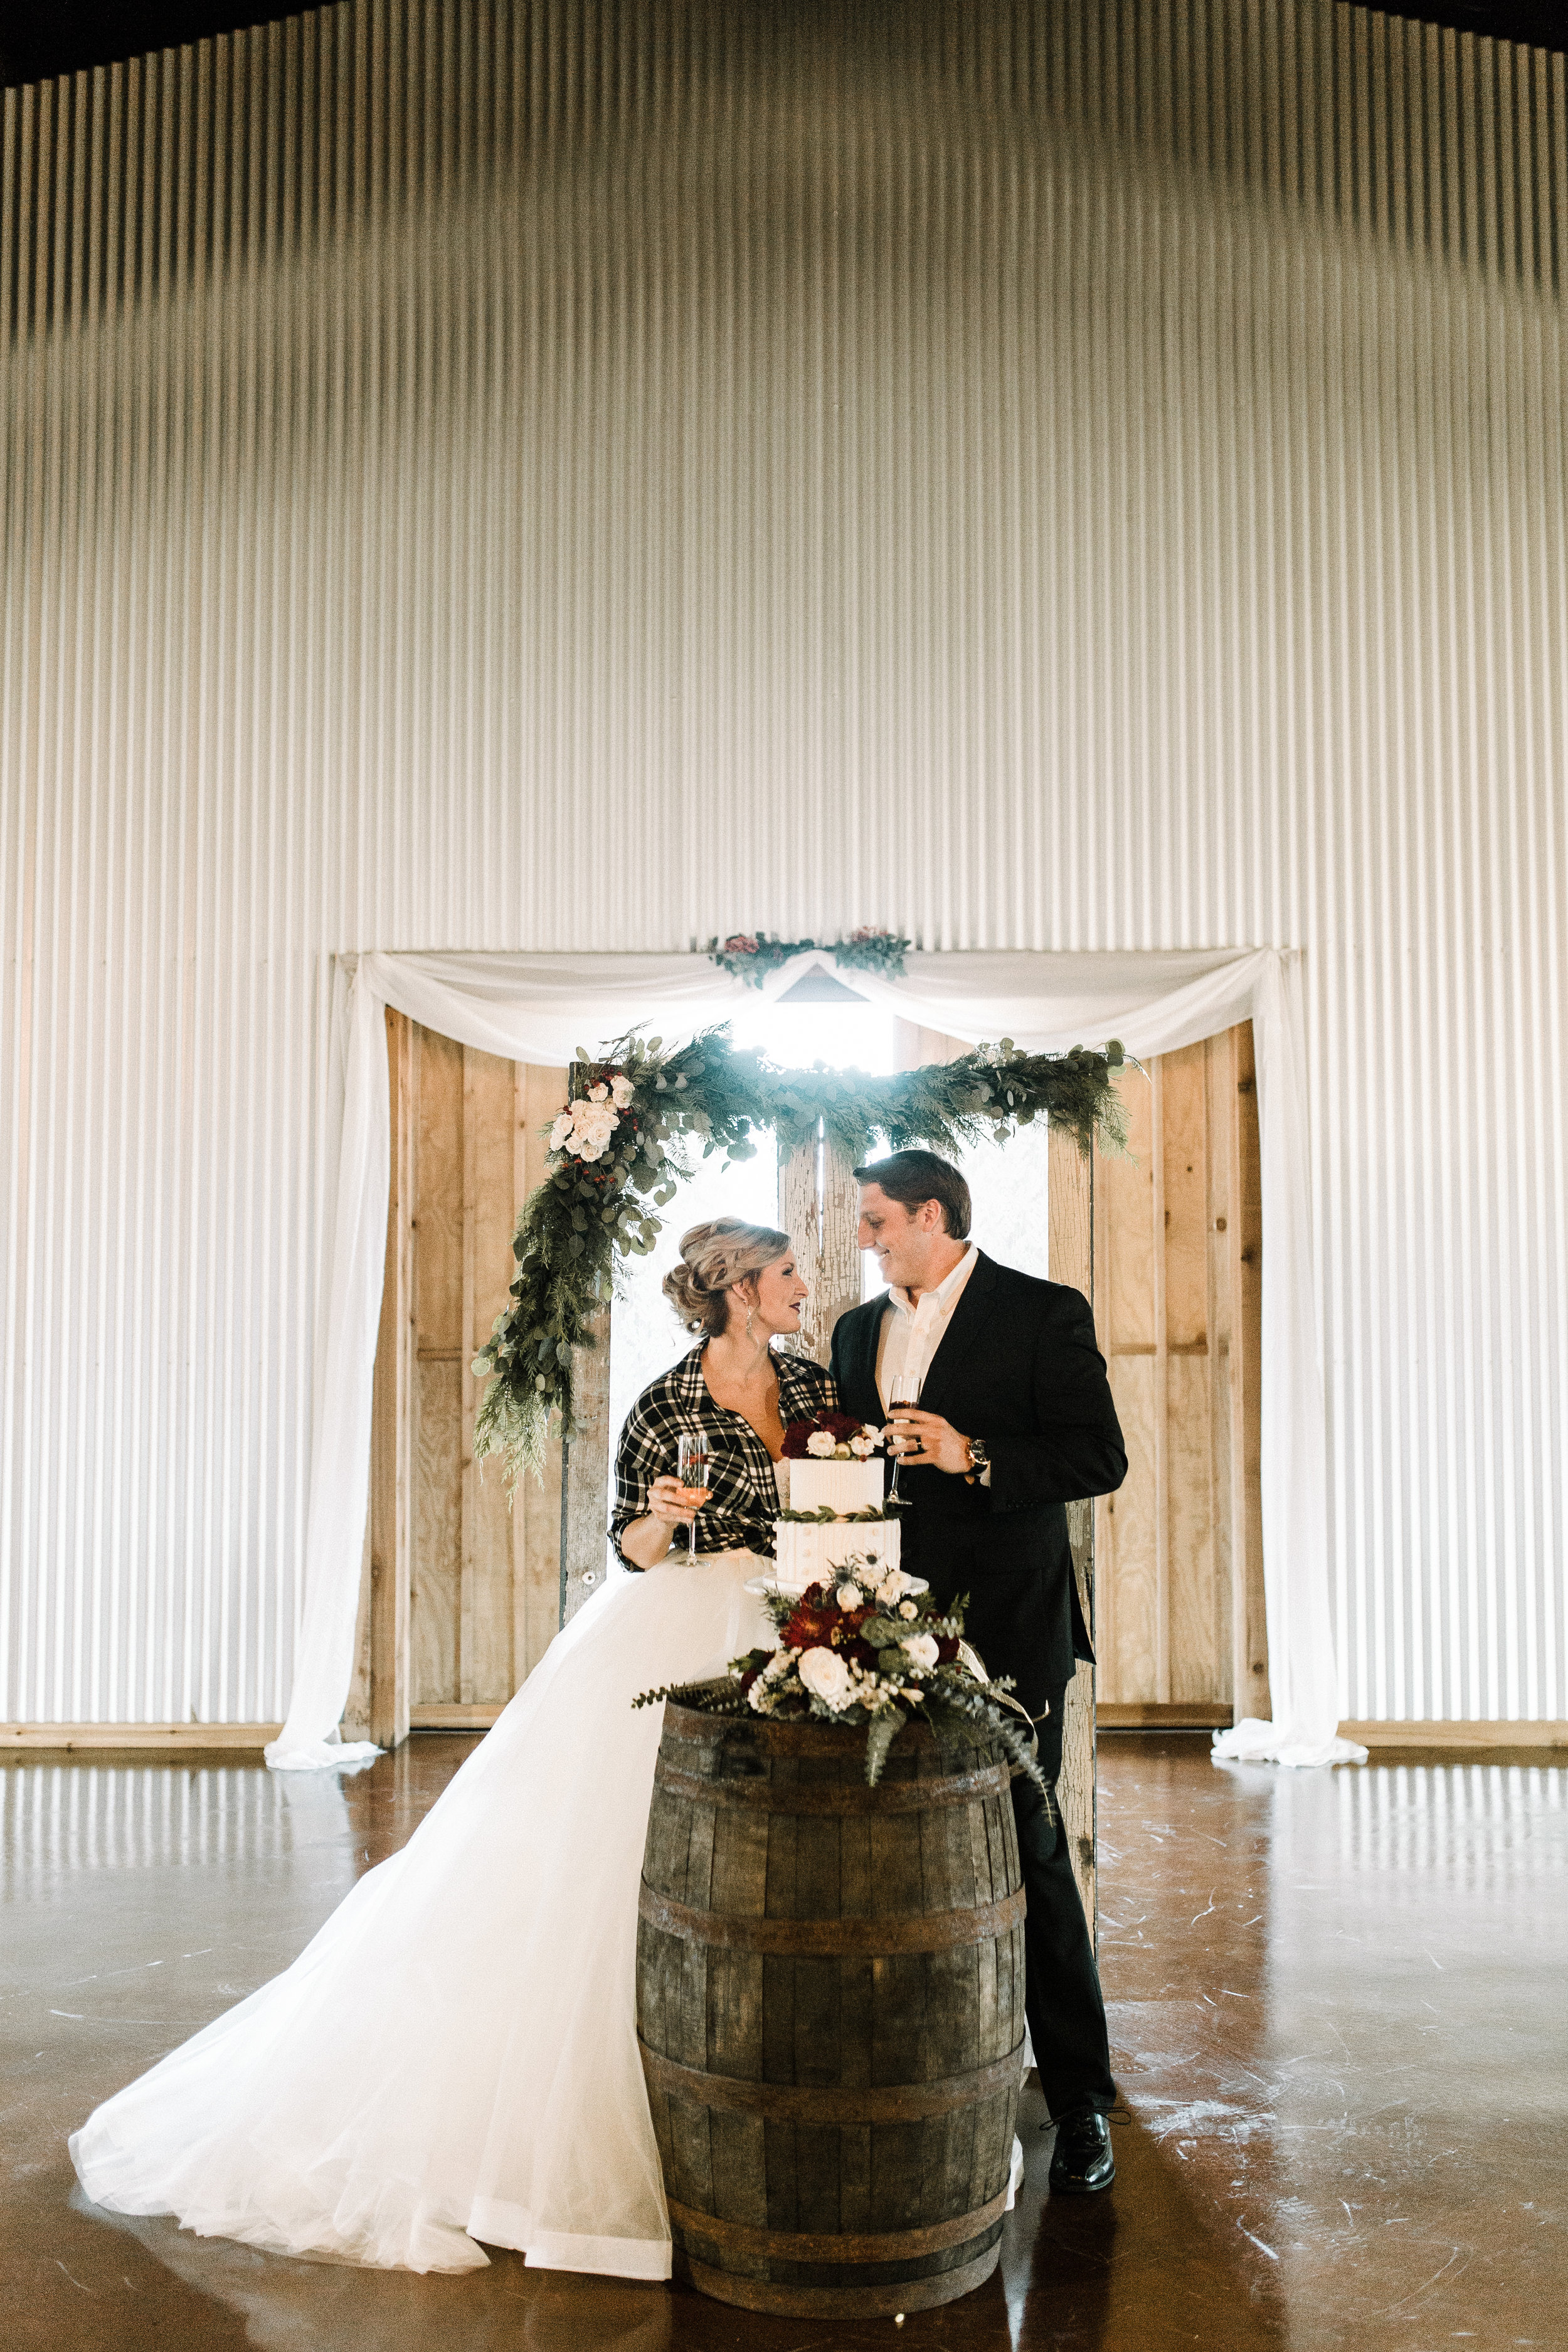 Broken Horn Ranch Oklahoma Winter Wedding - April Guerra Photography -- Wedding Blog - The Overwhelmed Bride